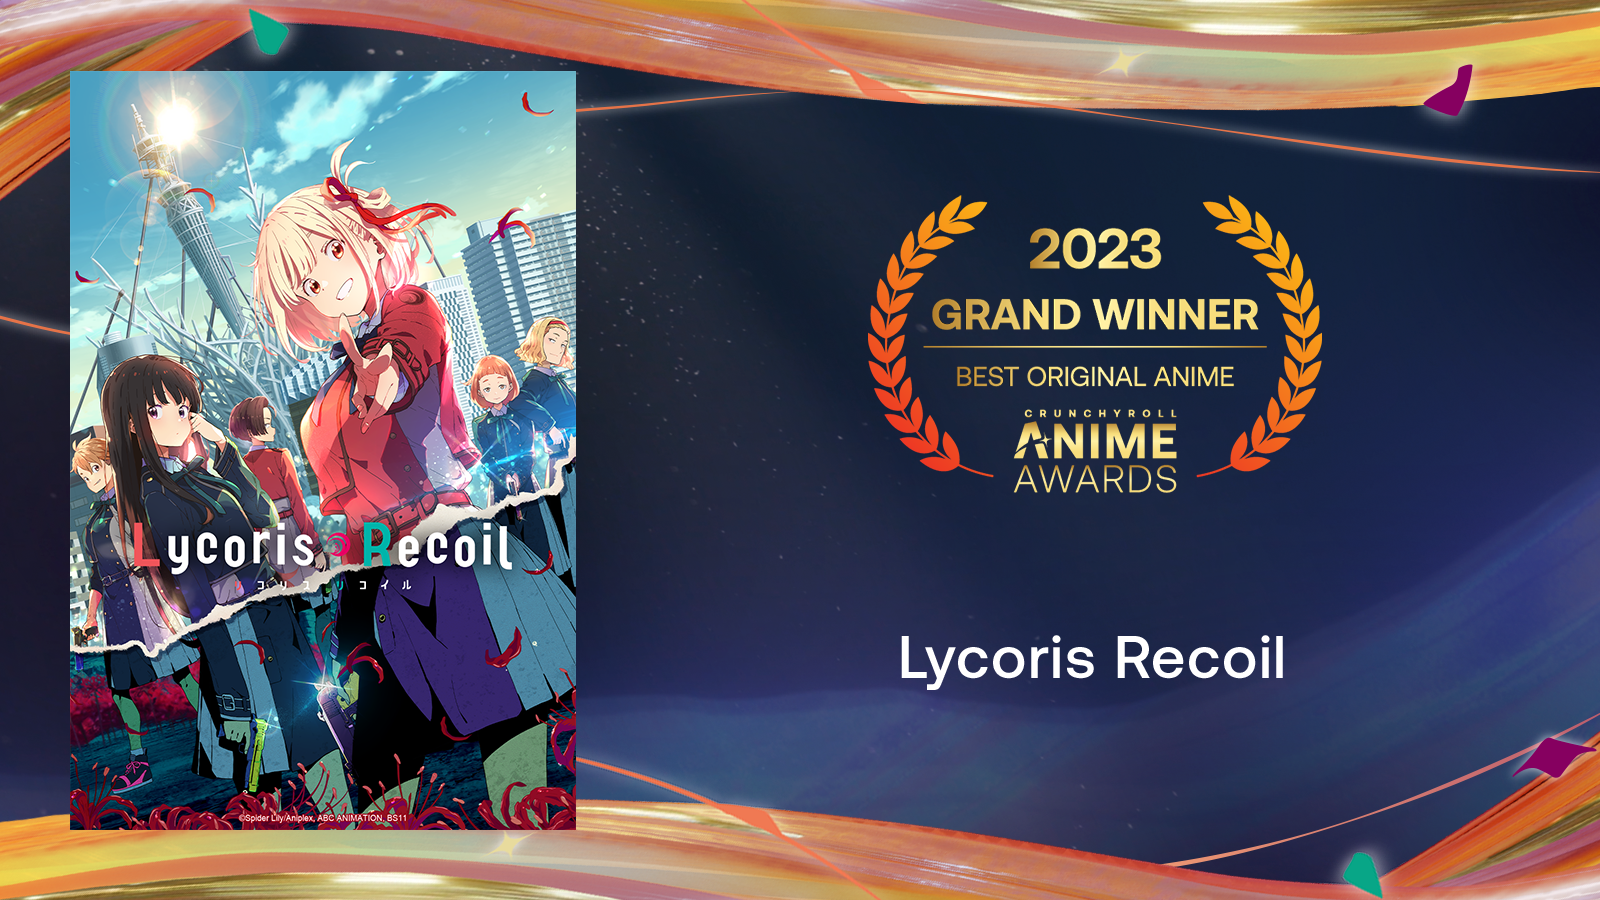 Crunchyroll - Anime Awards 2023 Winners: Anime of the Year and Full List